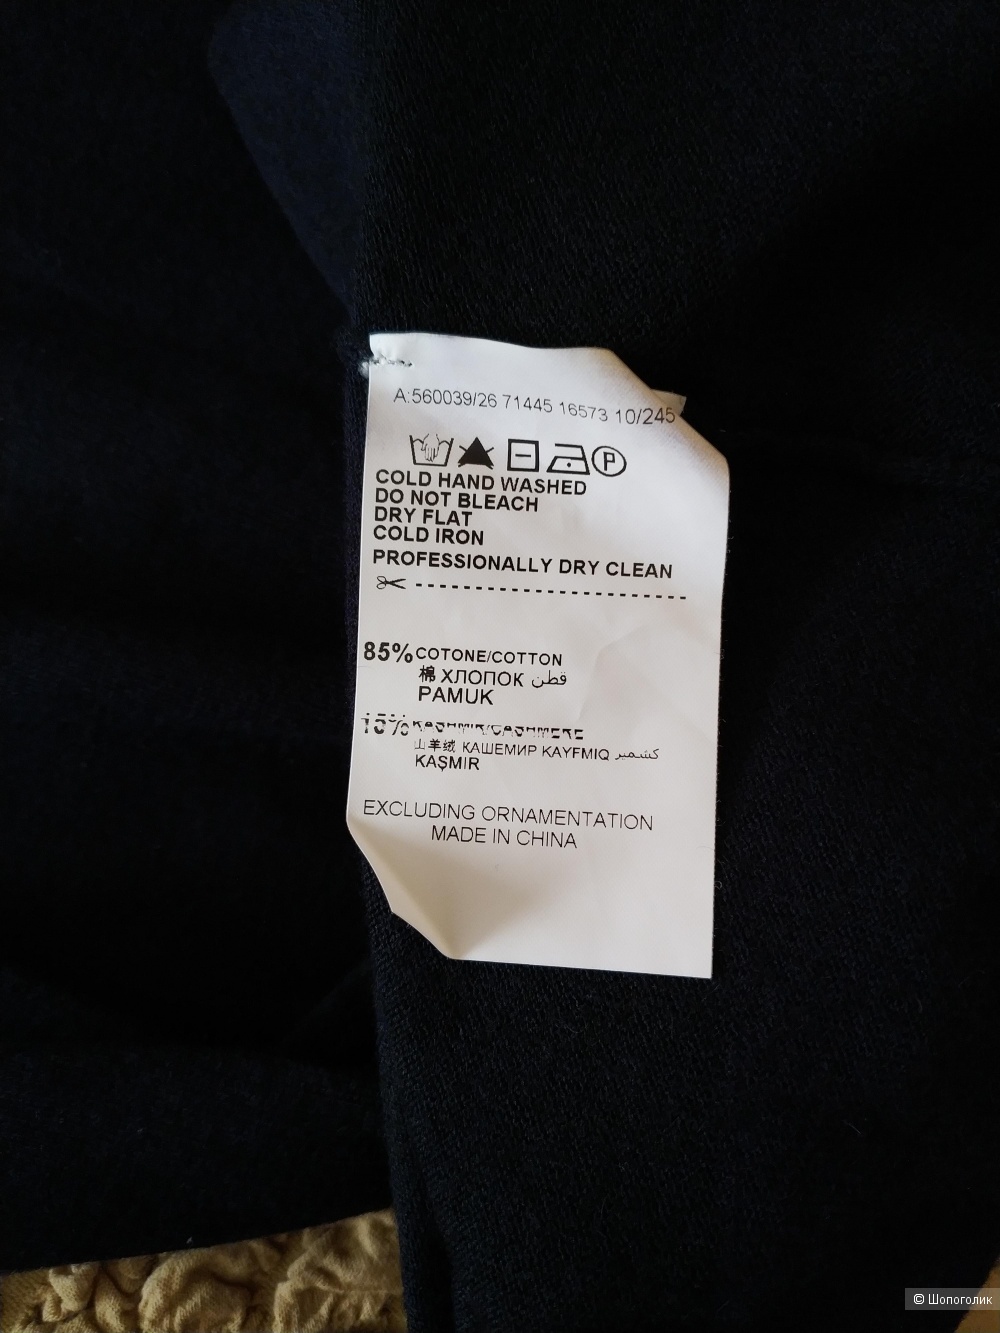 Платье Trussardi Jeans размер М на 46-48